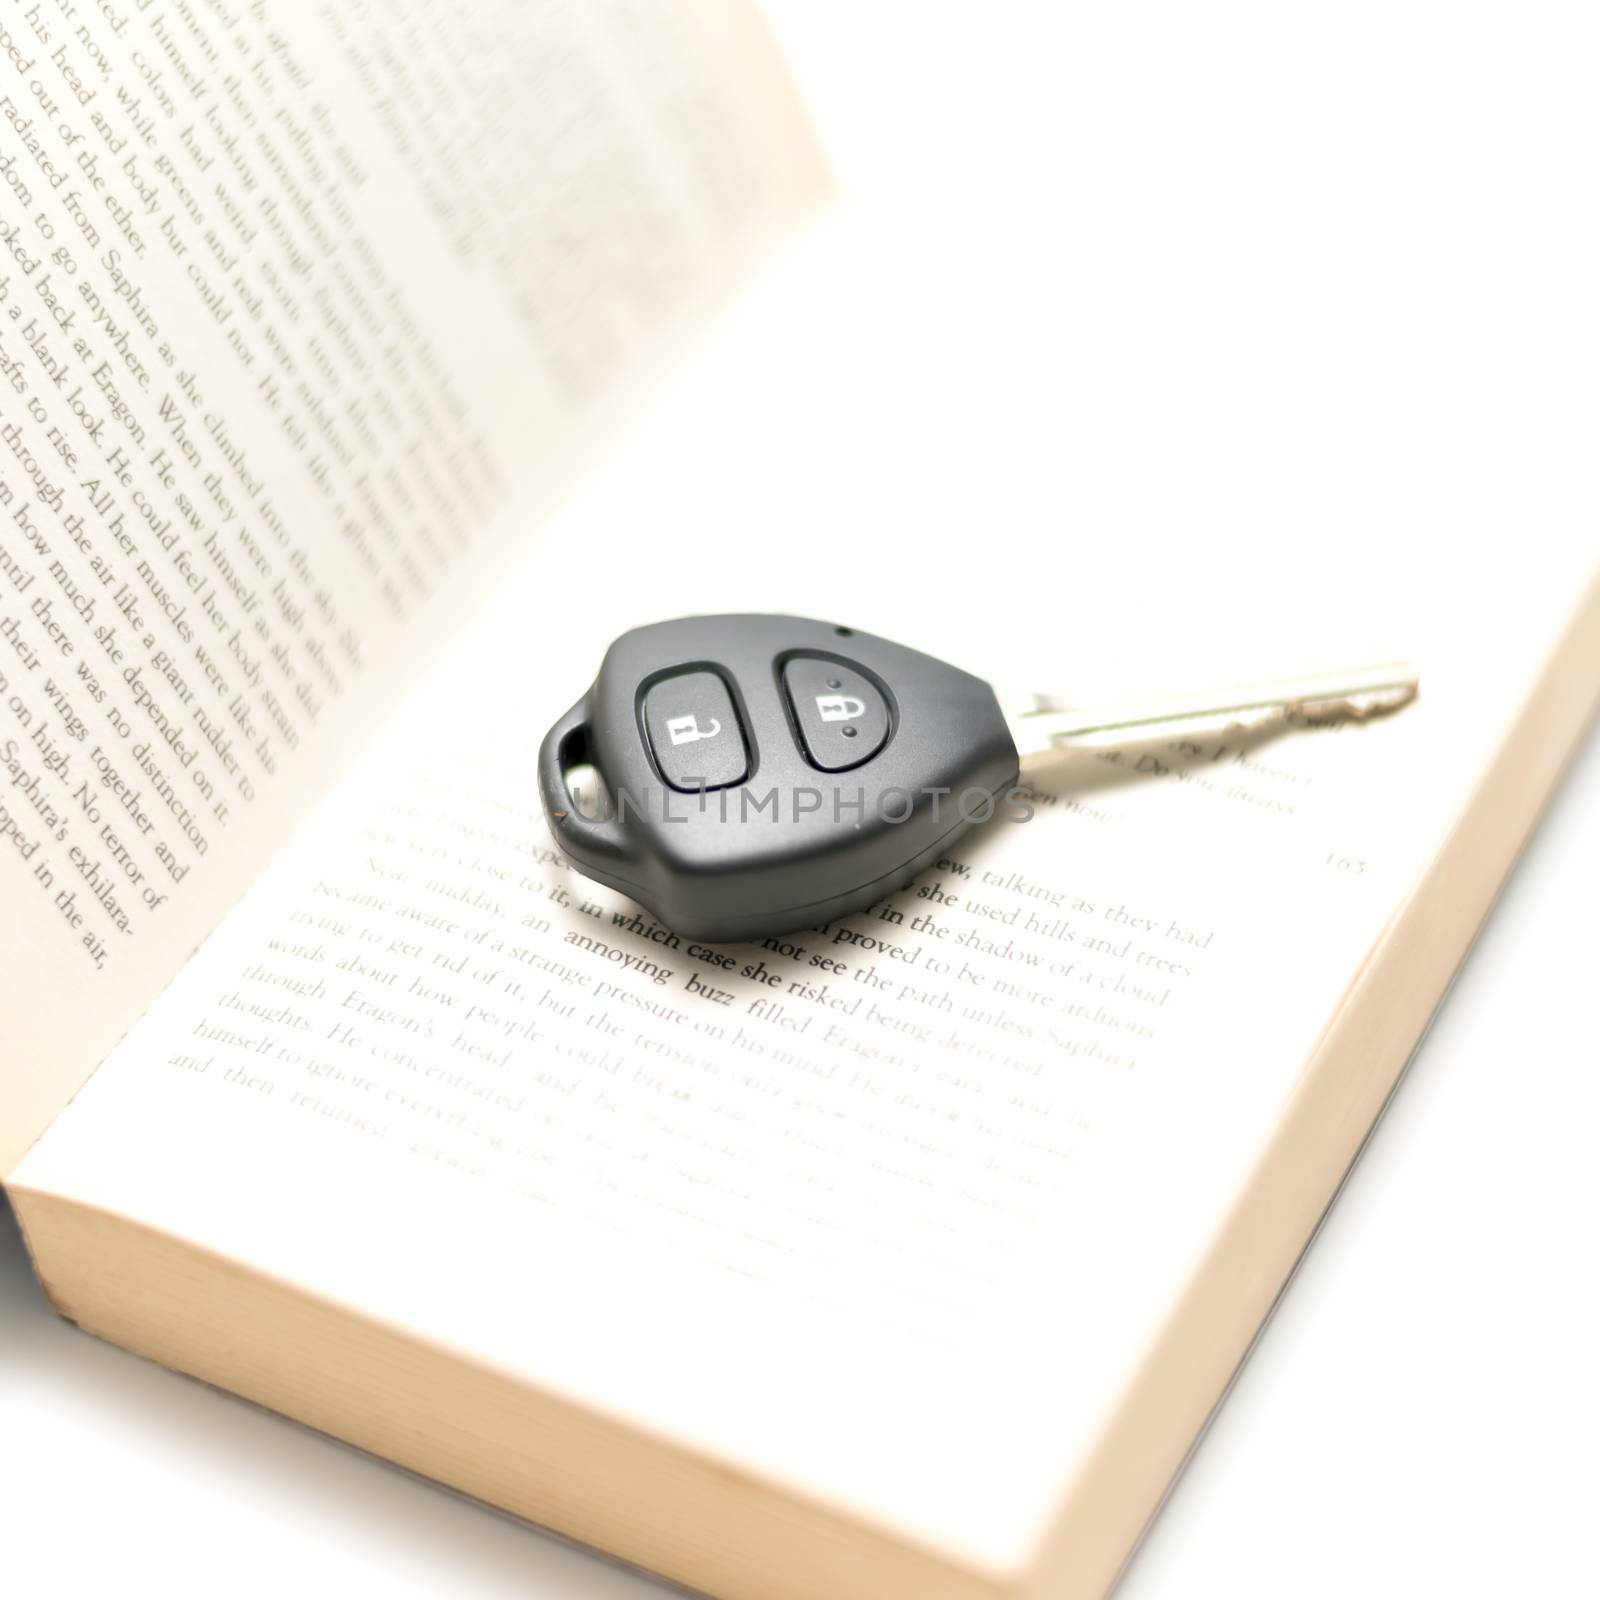 car key with book by ammza12